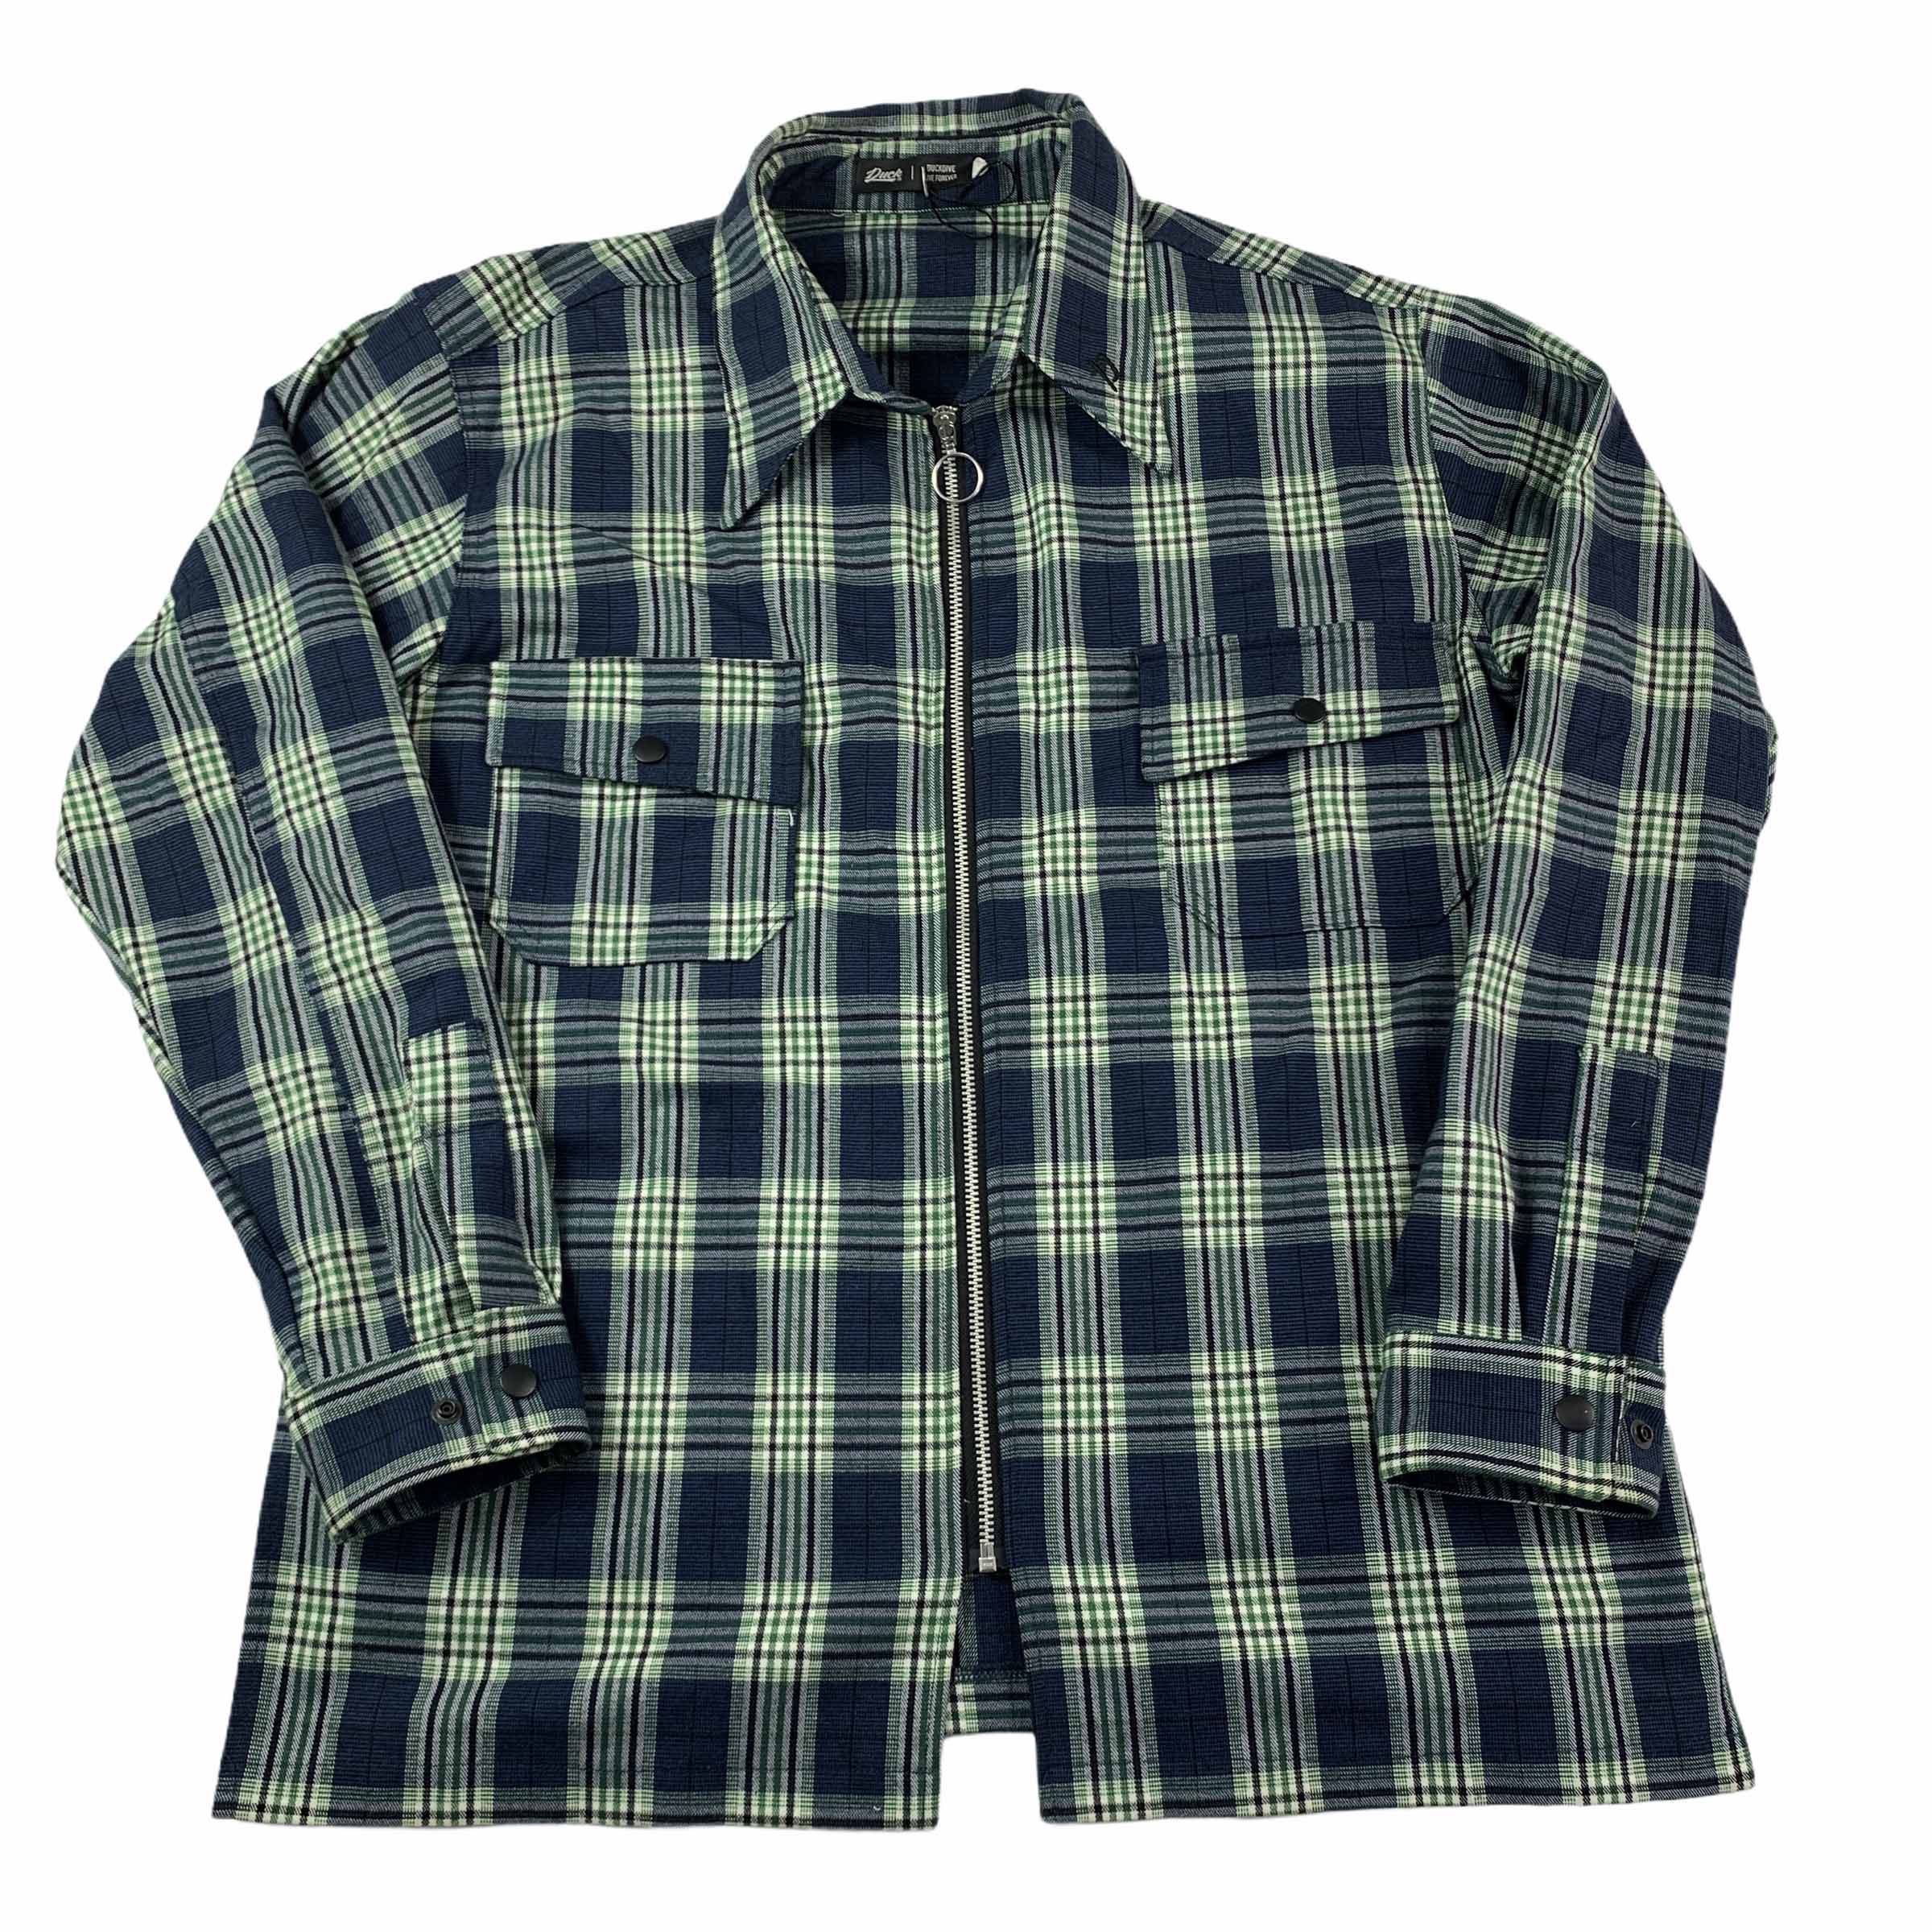 [Duckdive] Two pocket check shirt jacket - Size M